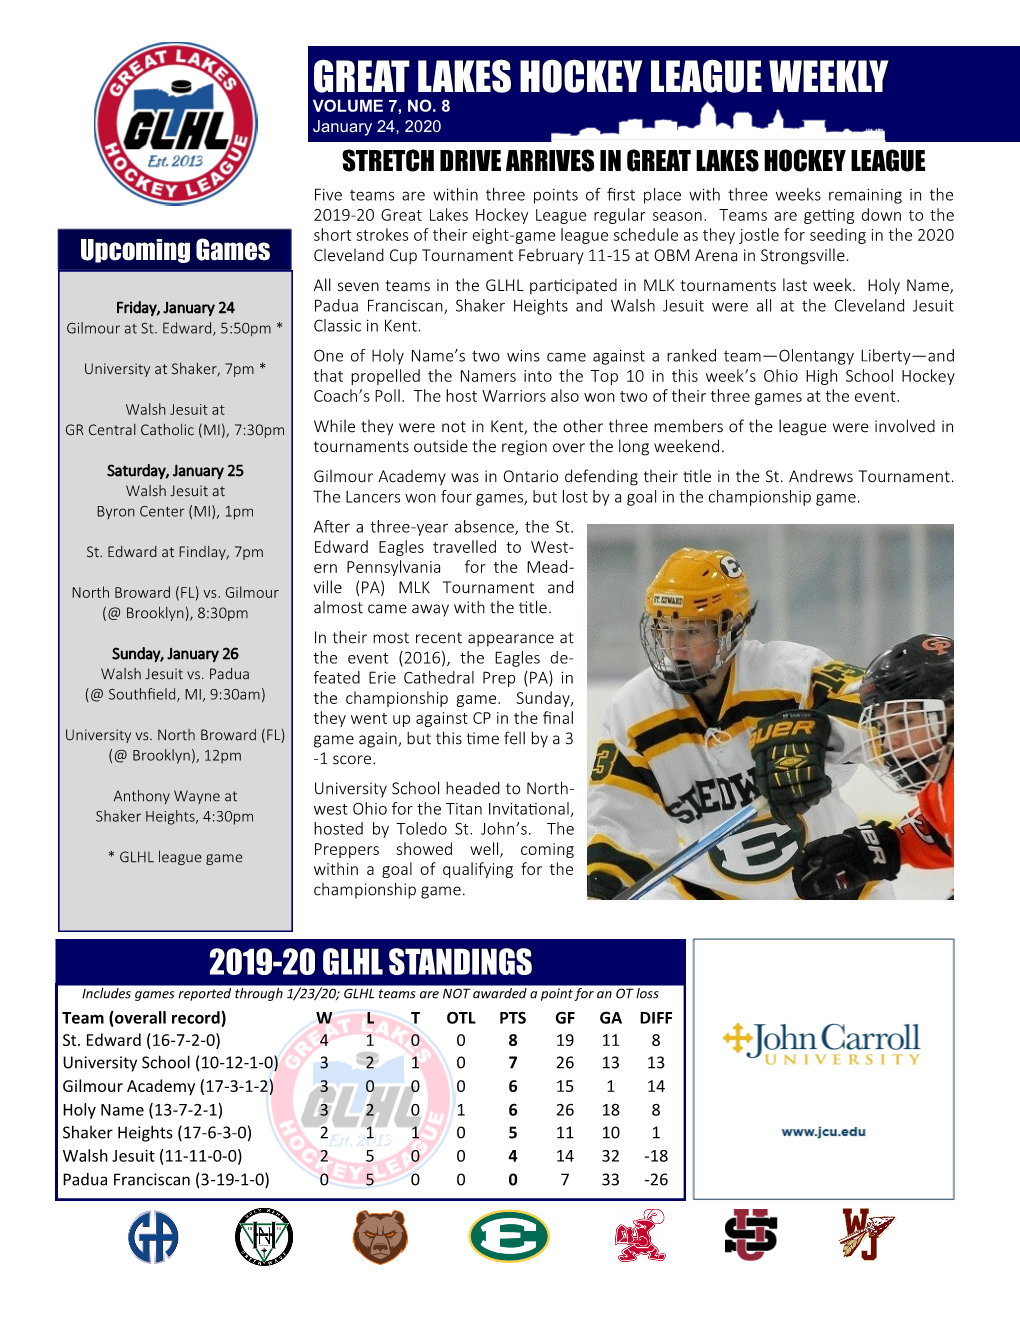 Great Lakes Hockey League Weekly Volume 7, No